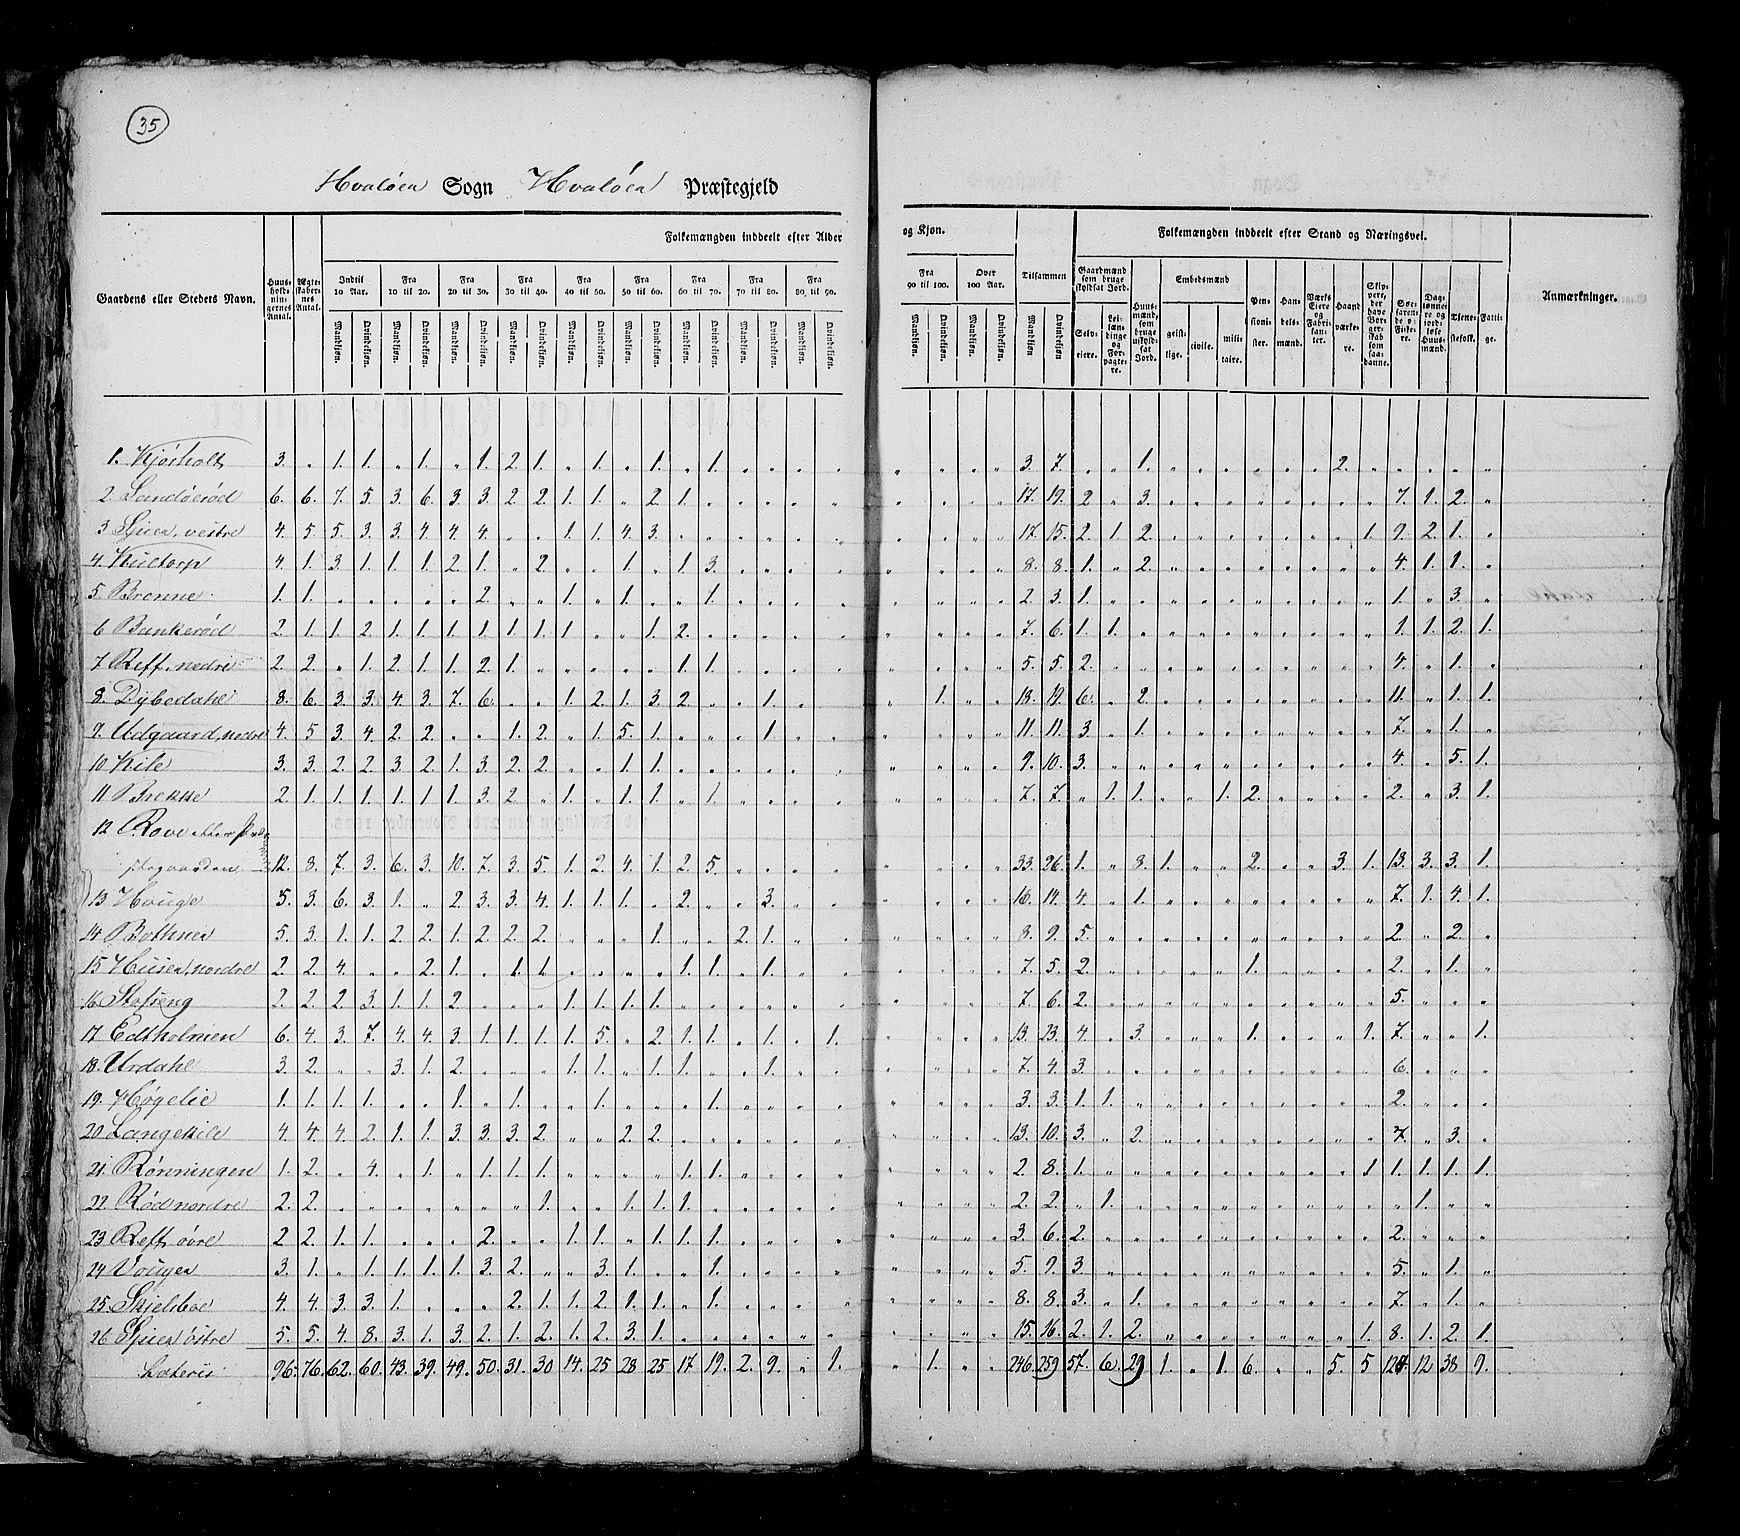 RA, Census 1825, vol. 3: Smålenenes amt, 1825, p. 35